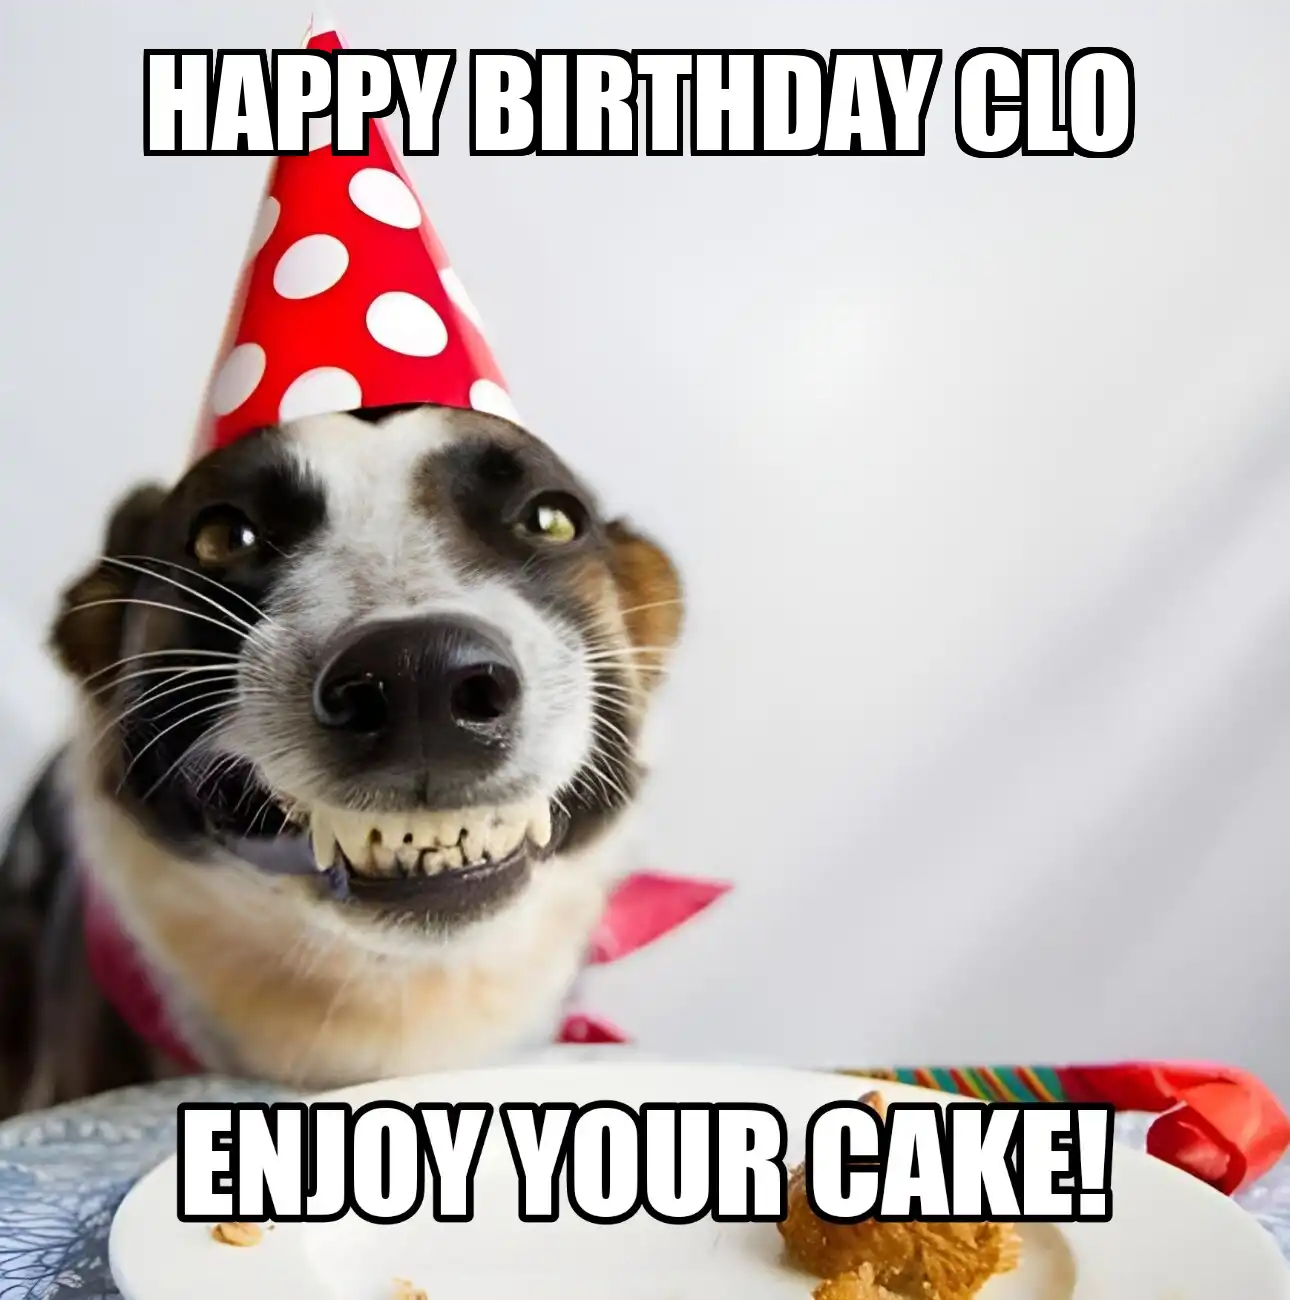 Happy Birthday Clo Enjoy Your Cake Dog Meme